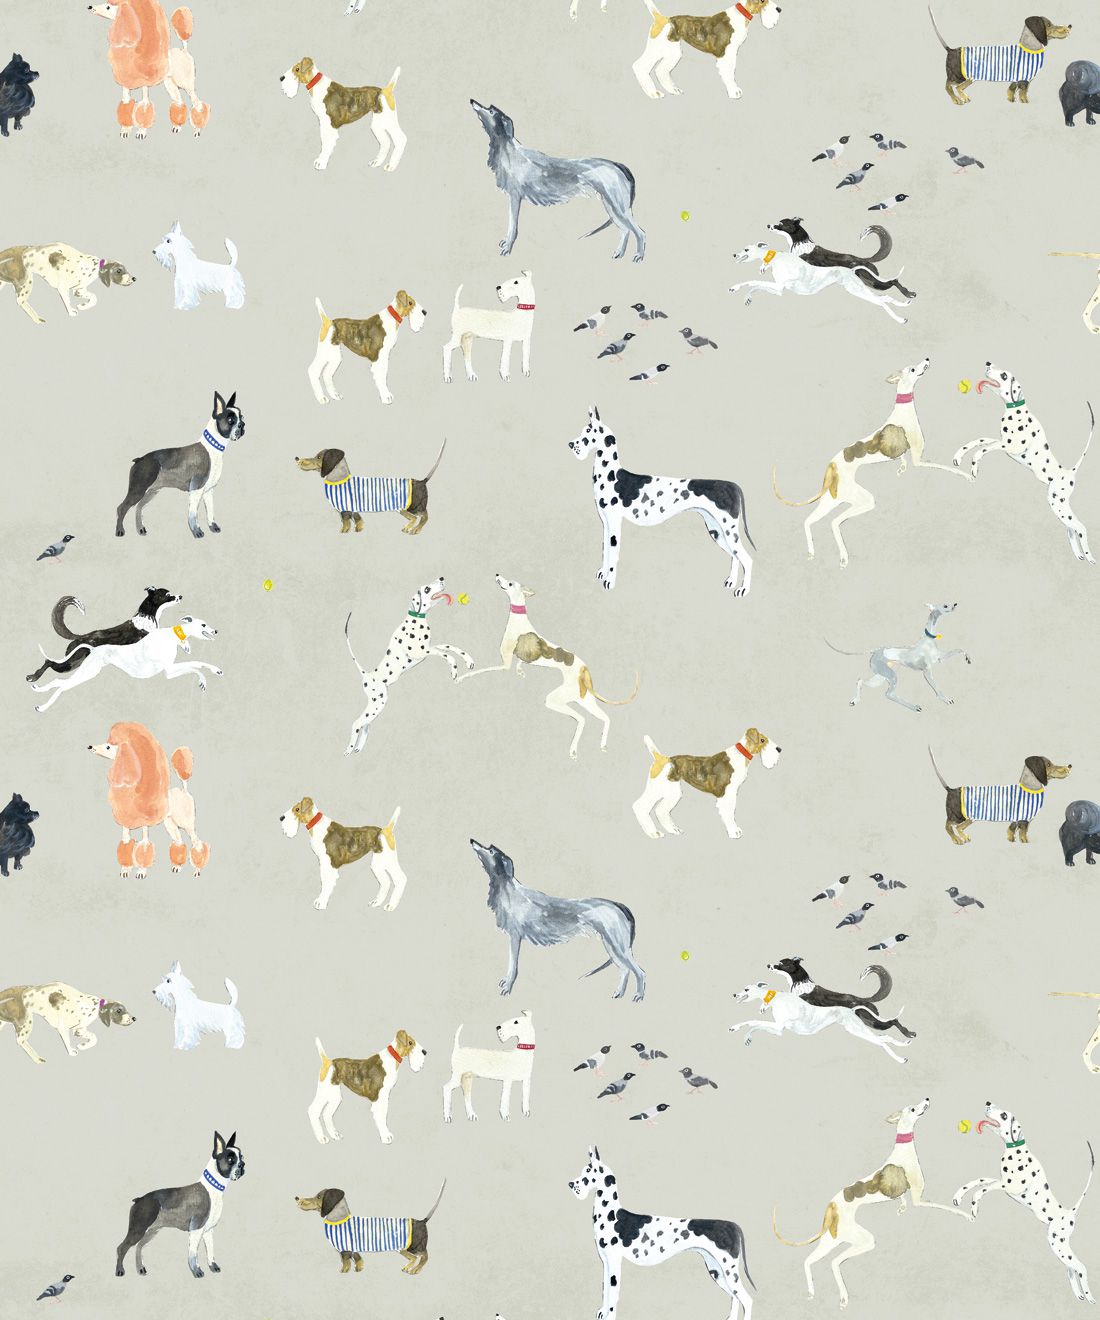 Doggies wallpaper â wallpaper for dog lovers â milton king